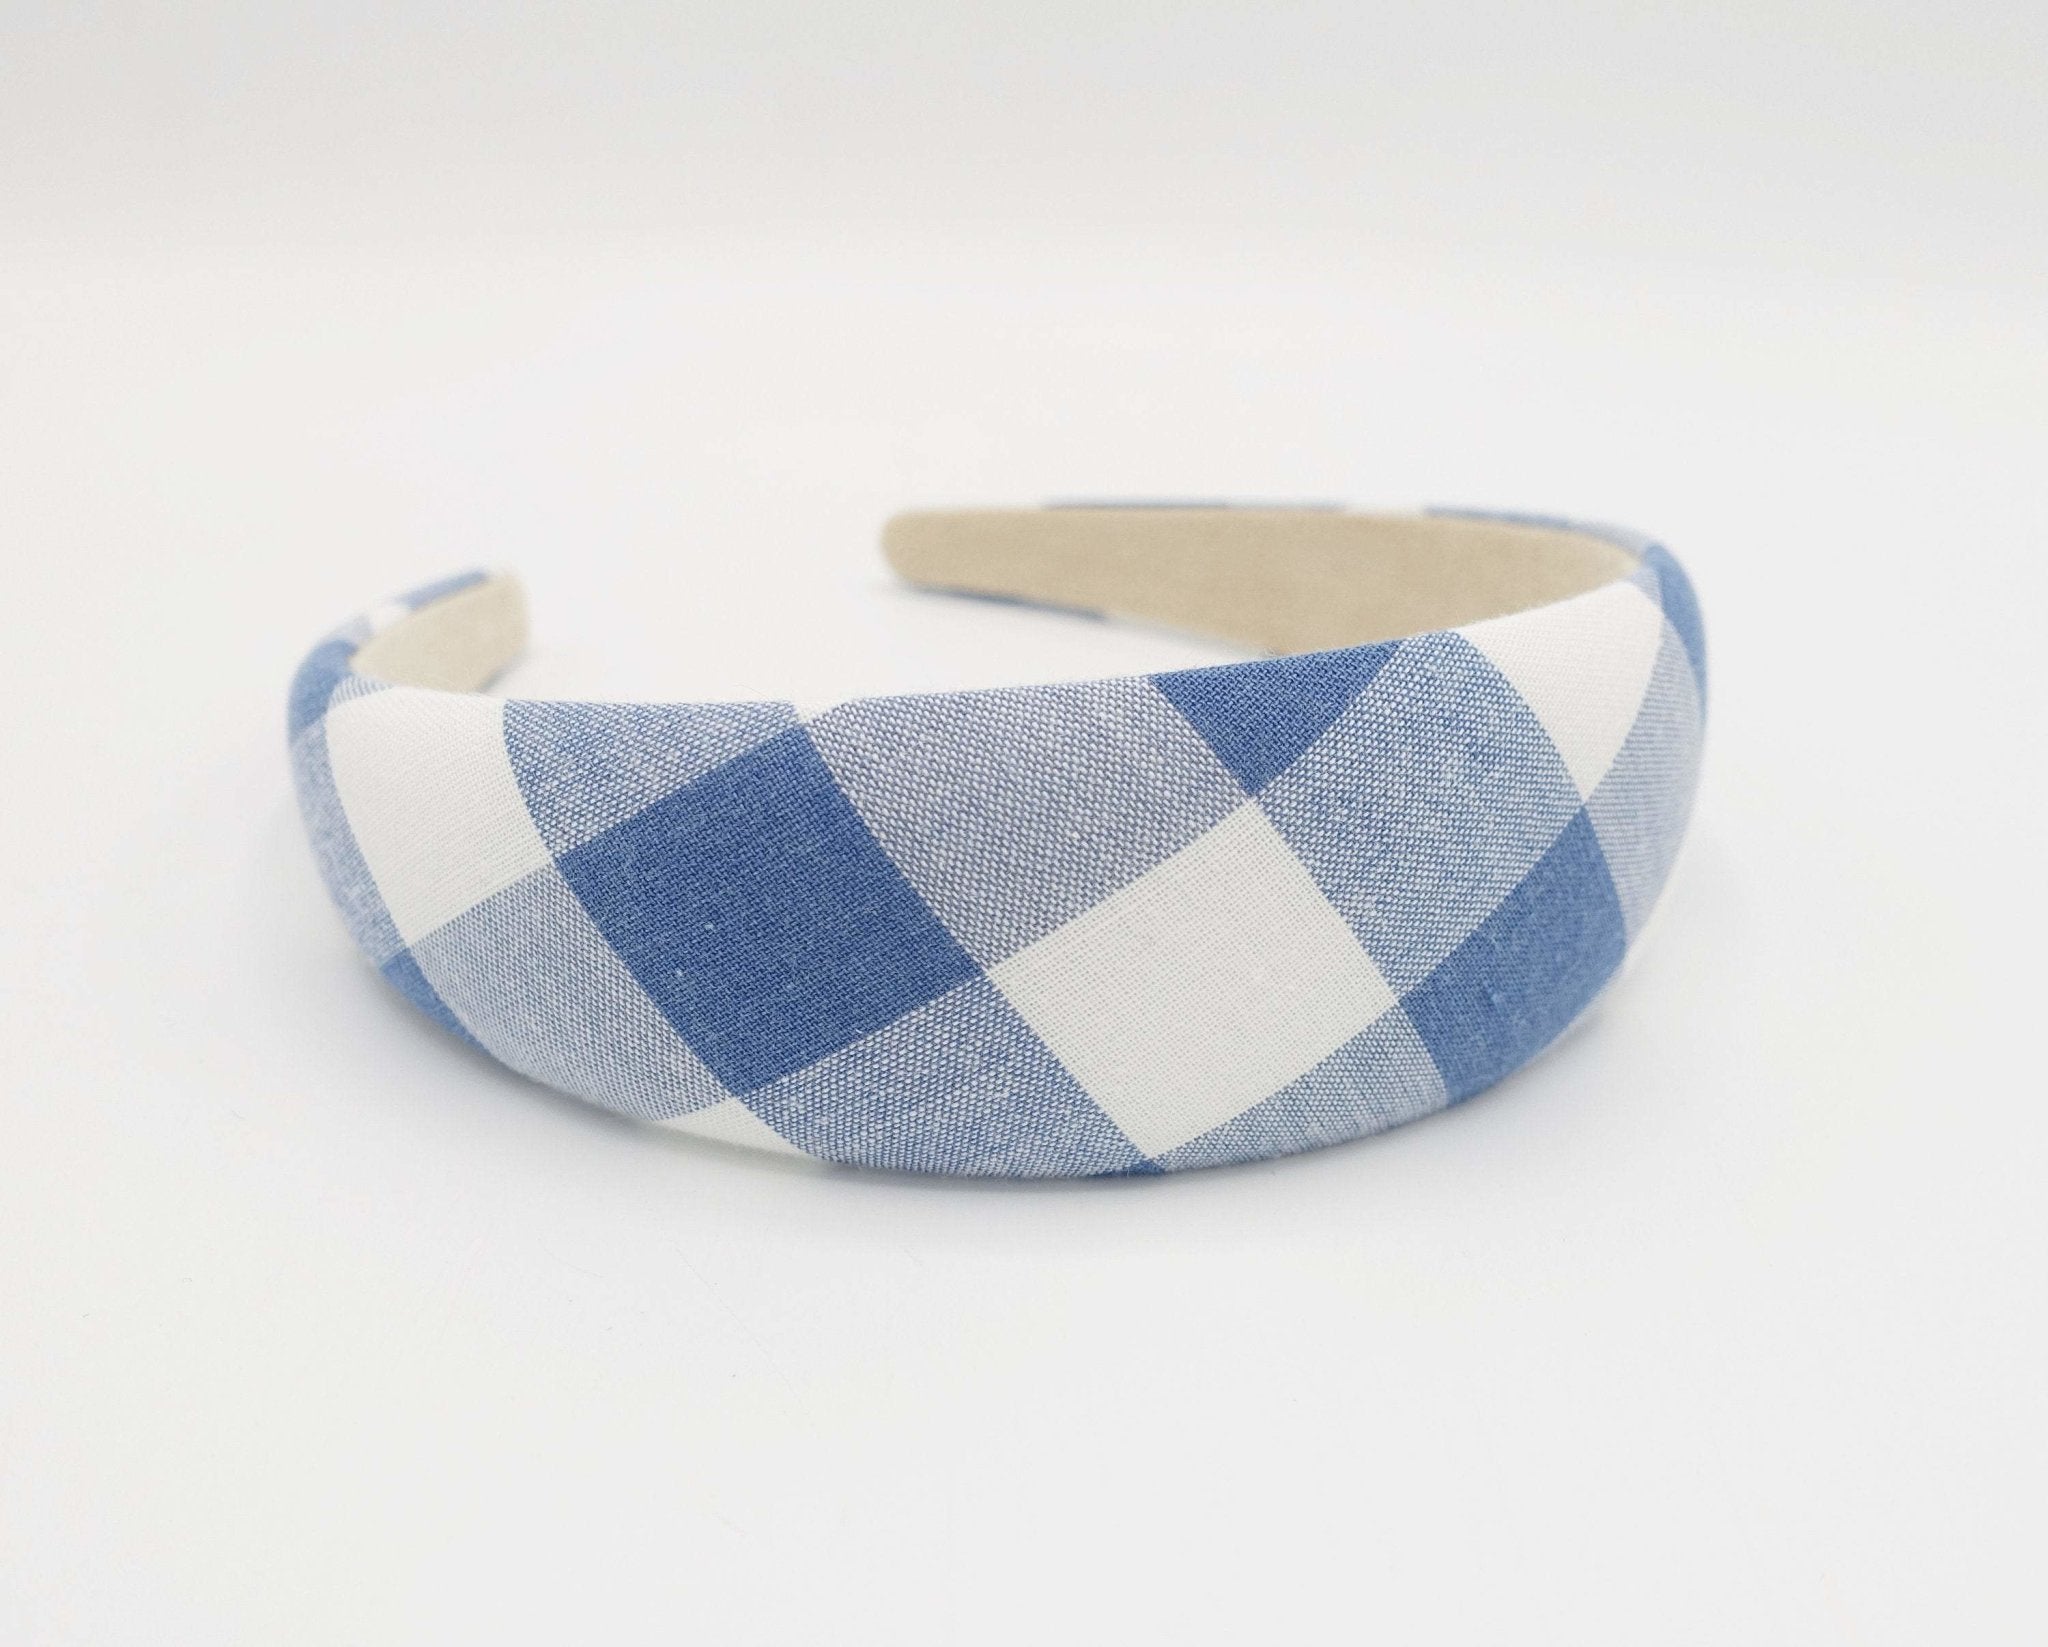 VeryShine Headband blue gingham check padded headband checkered pattern hairband casual hair accessory for women